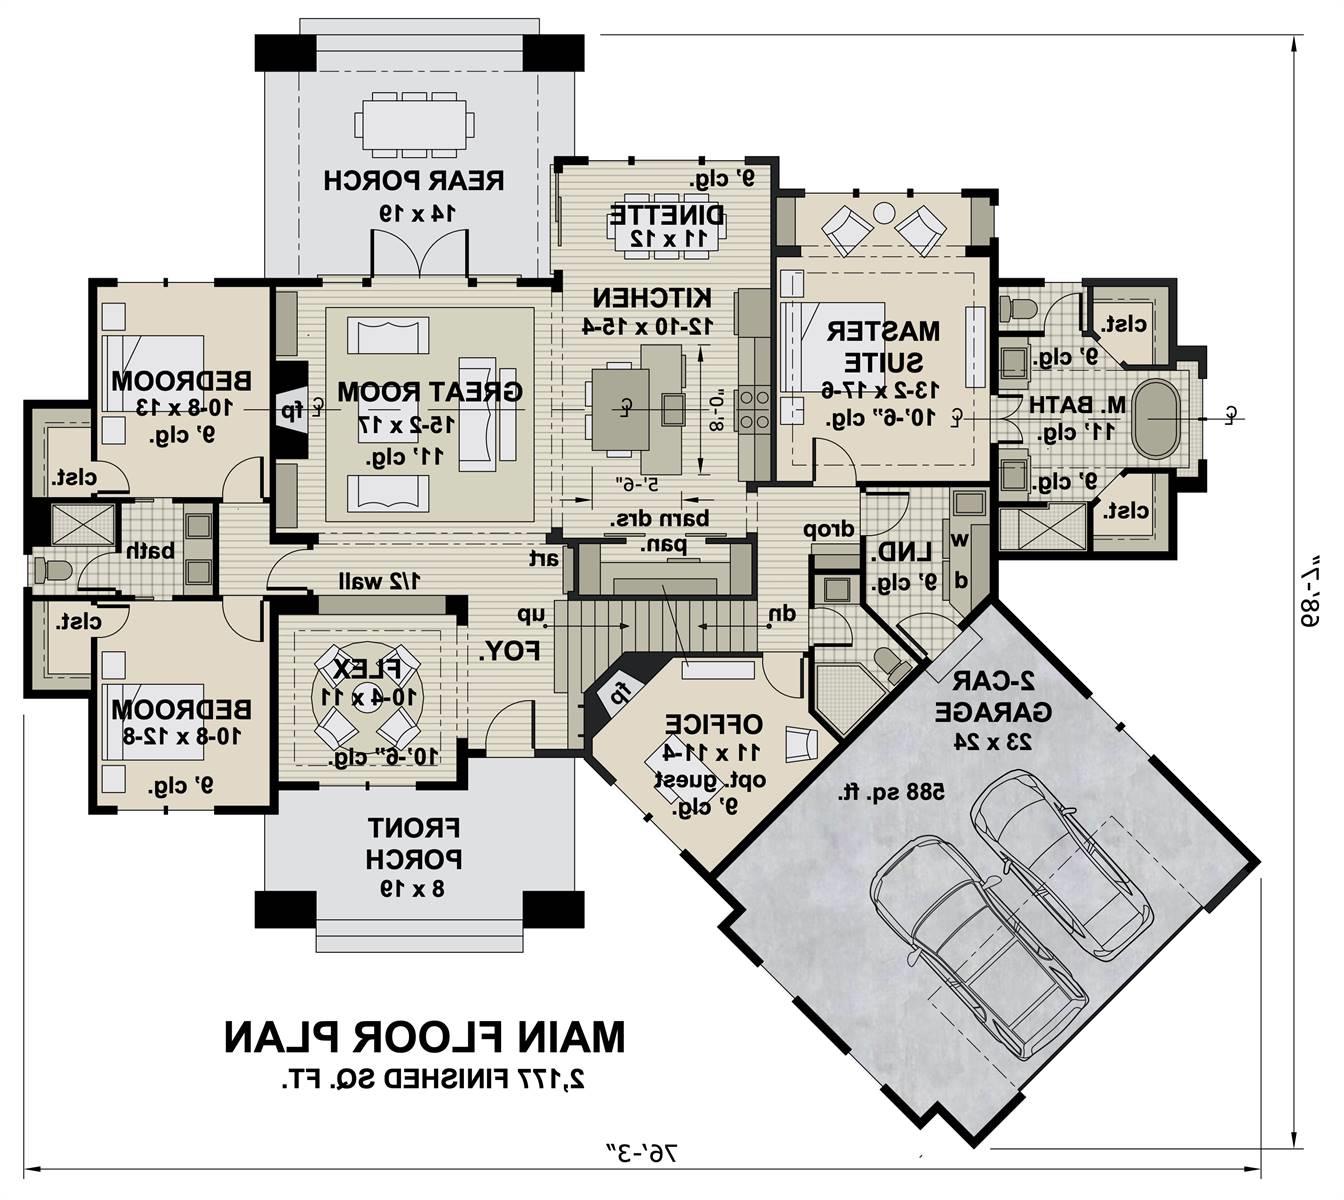 1st Floor image of Litchfield House Plan